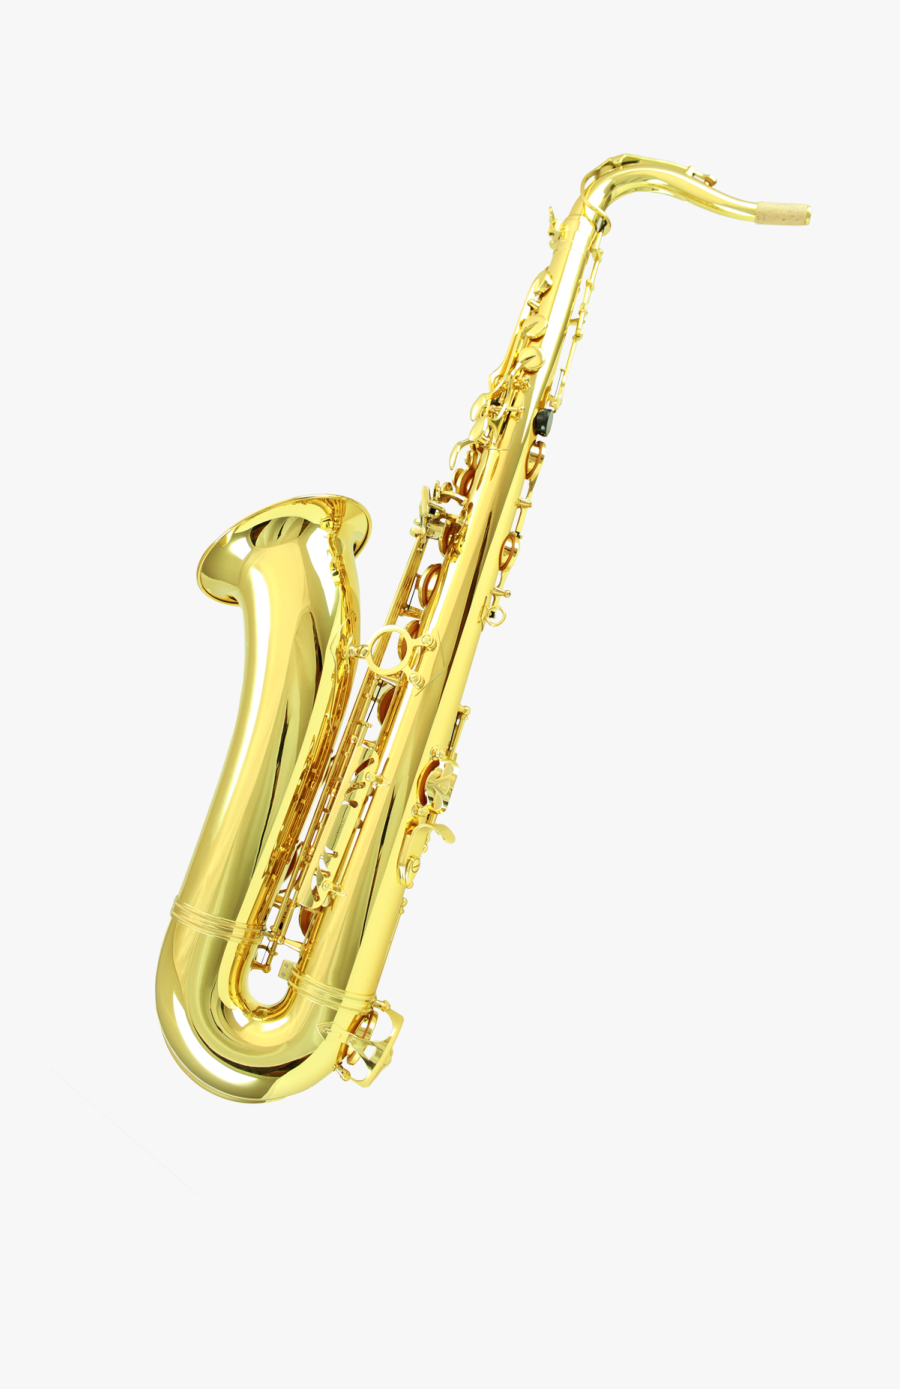 Baritone Saxophone - Saxophone Side, Transparent Clipart